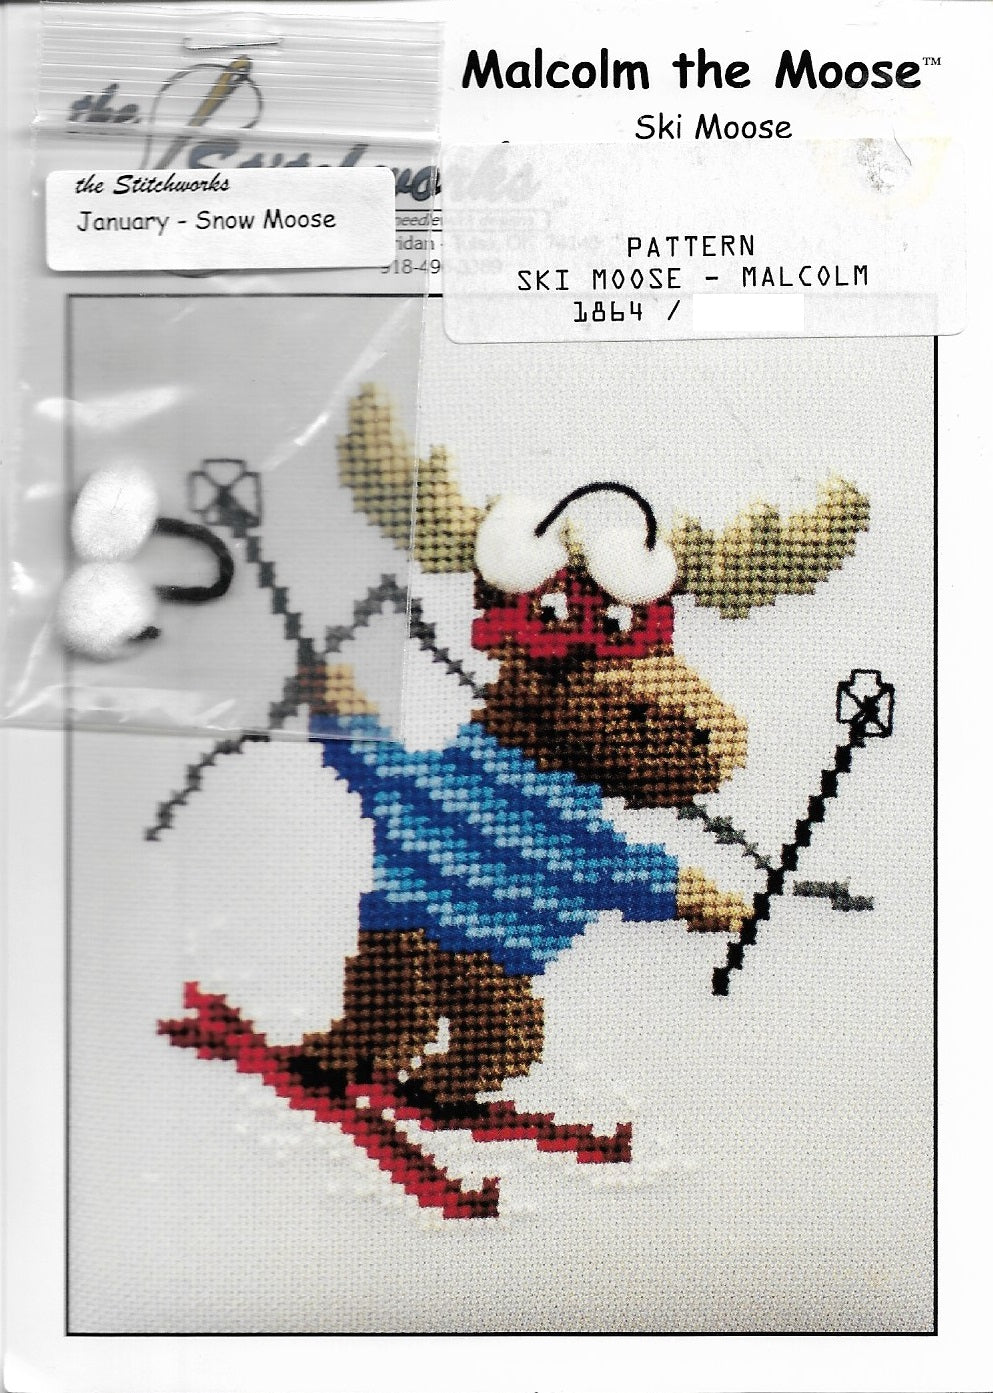 StitchWorks Ski Moose Malcolm cross stitch pattern